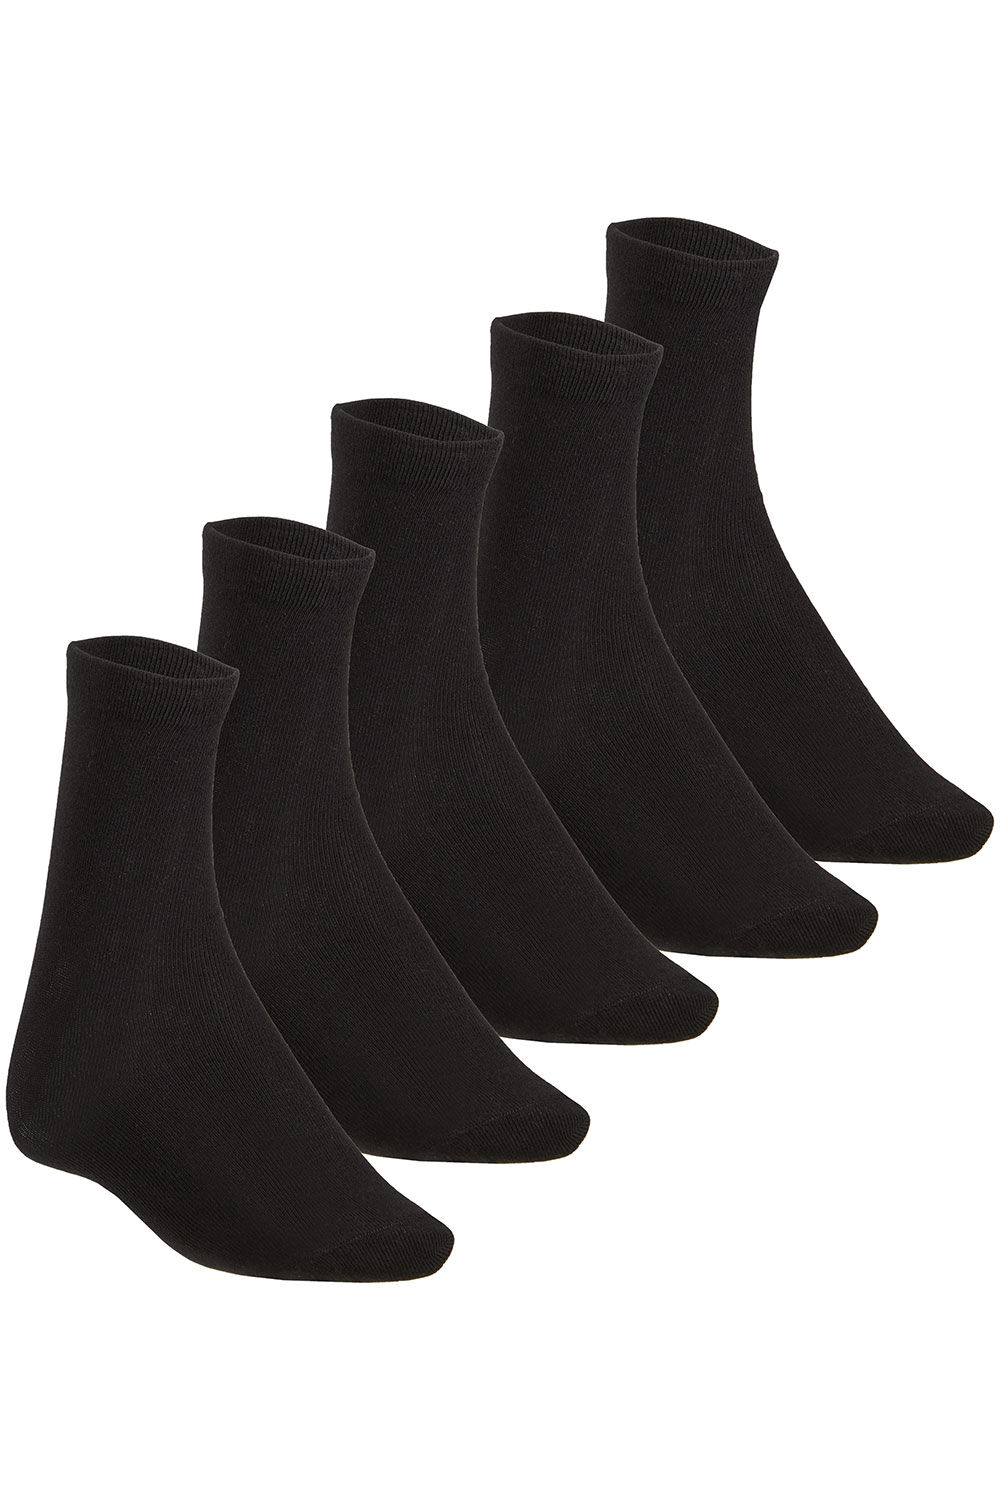 Bonmarche Black 5 Pack Ankle Socks, Size: One Size